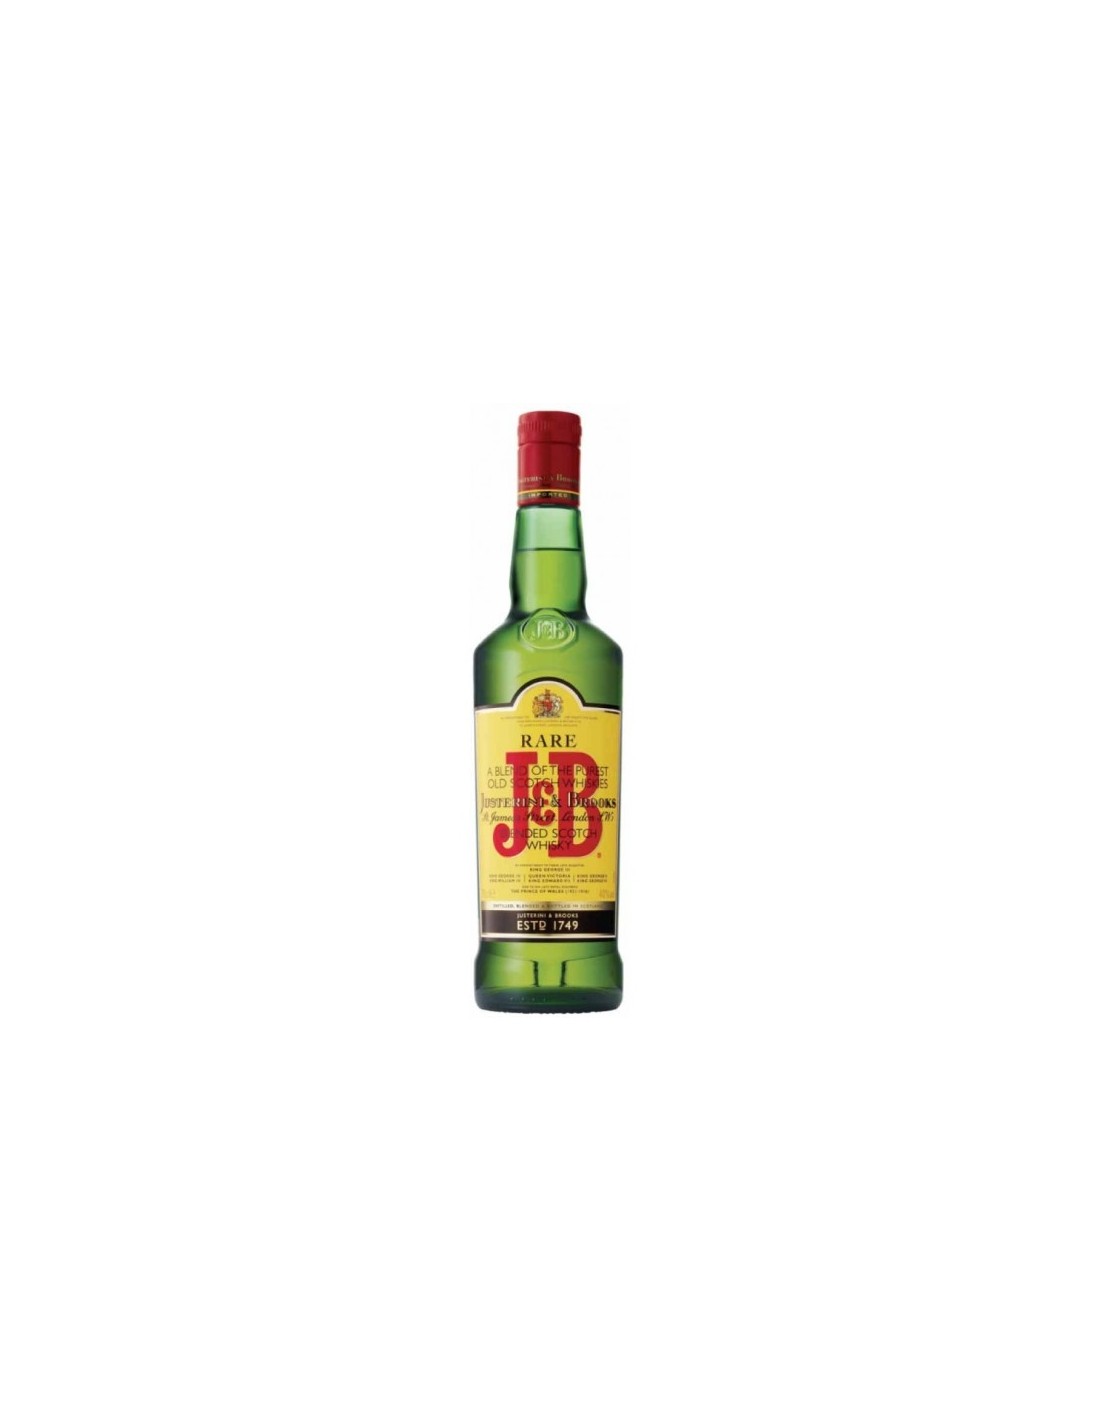 Whisky J&B Rare 0.7L, 40% alc., Scotia alcooldiscount.ro